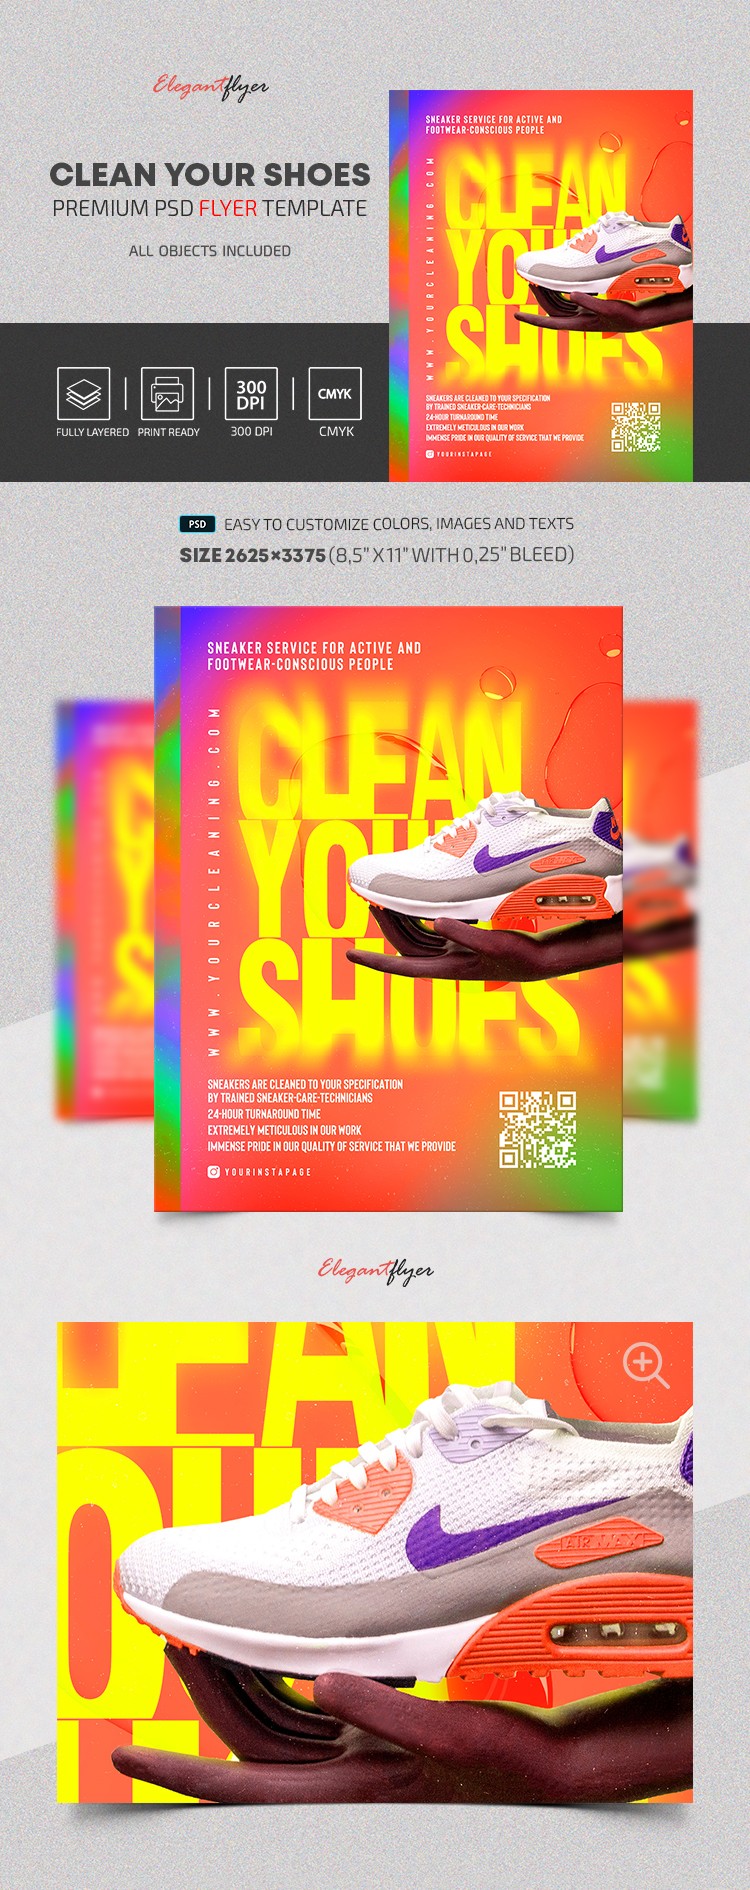 Clean your Shoes Flyer by ElegantFlyer